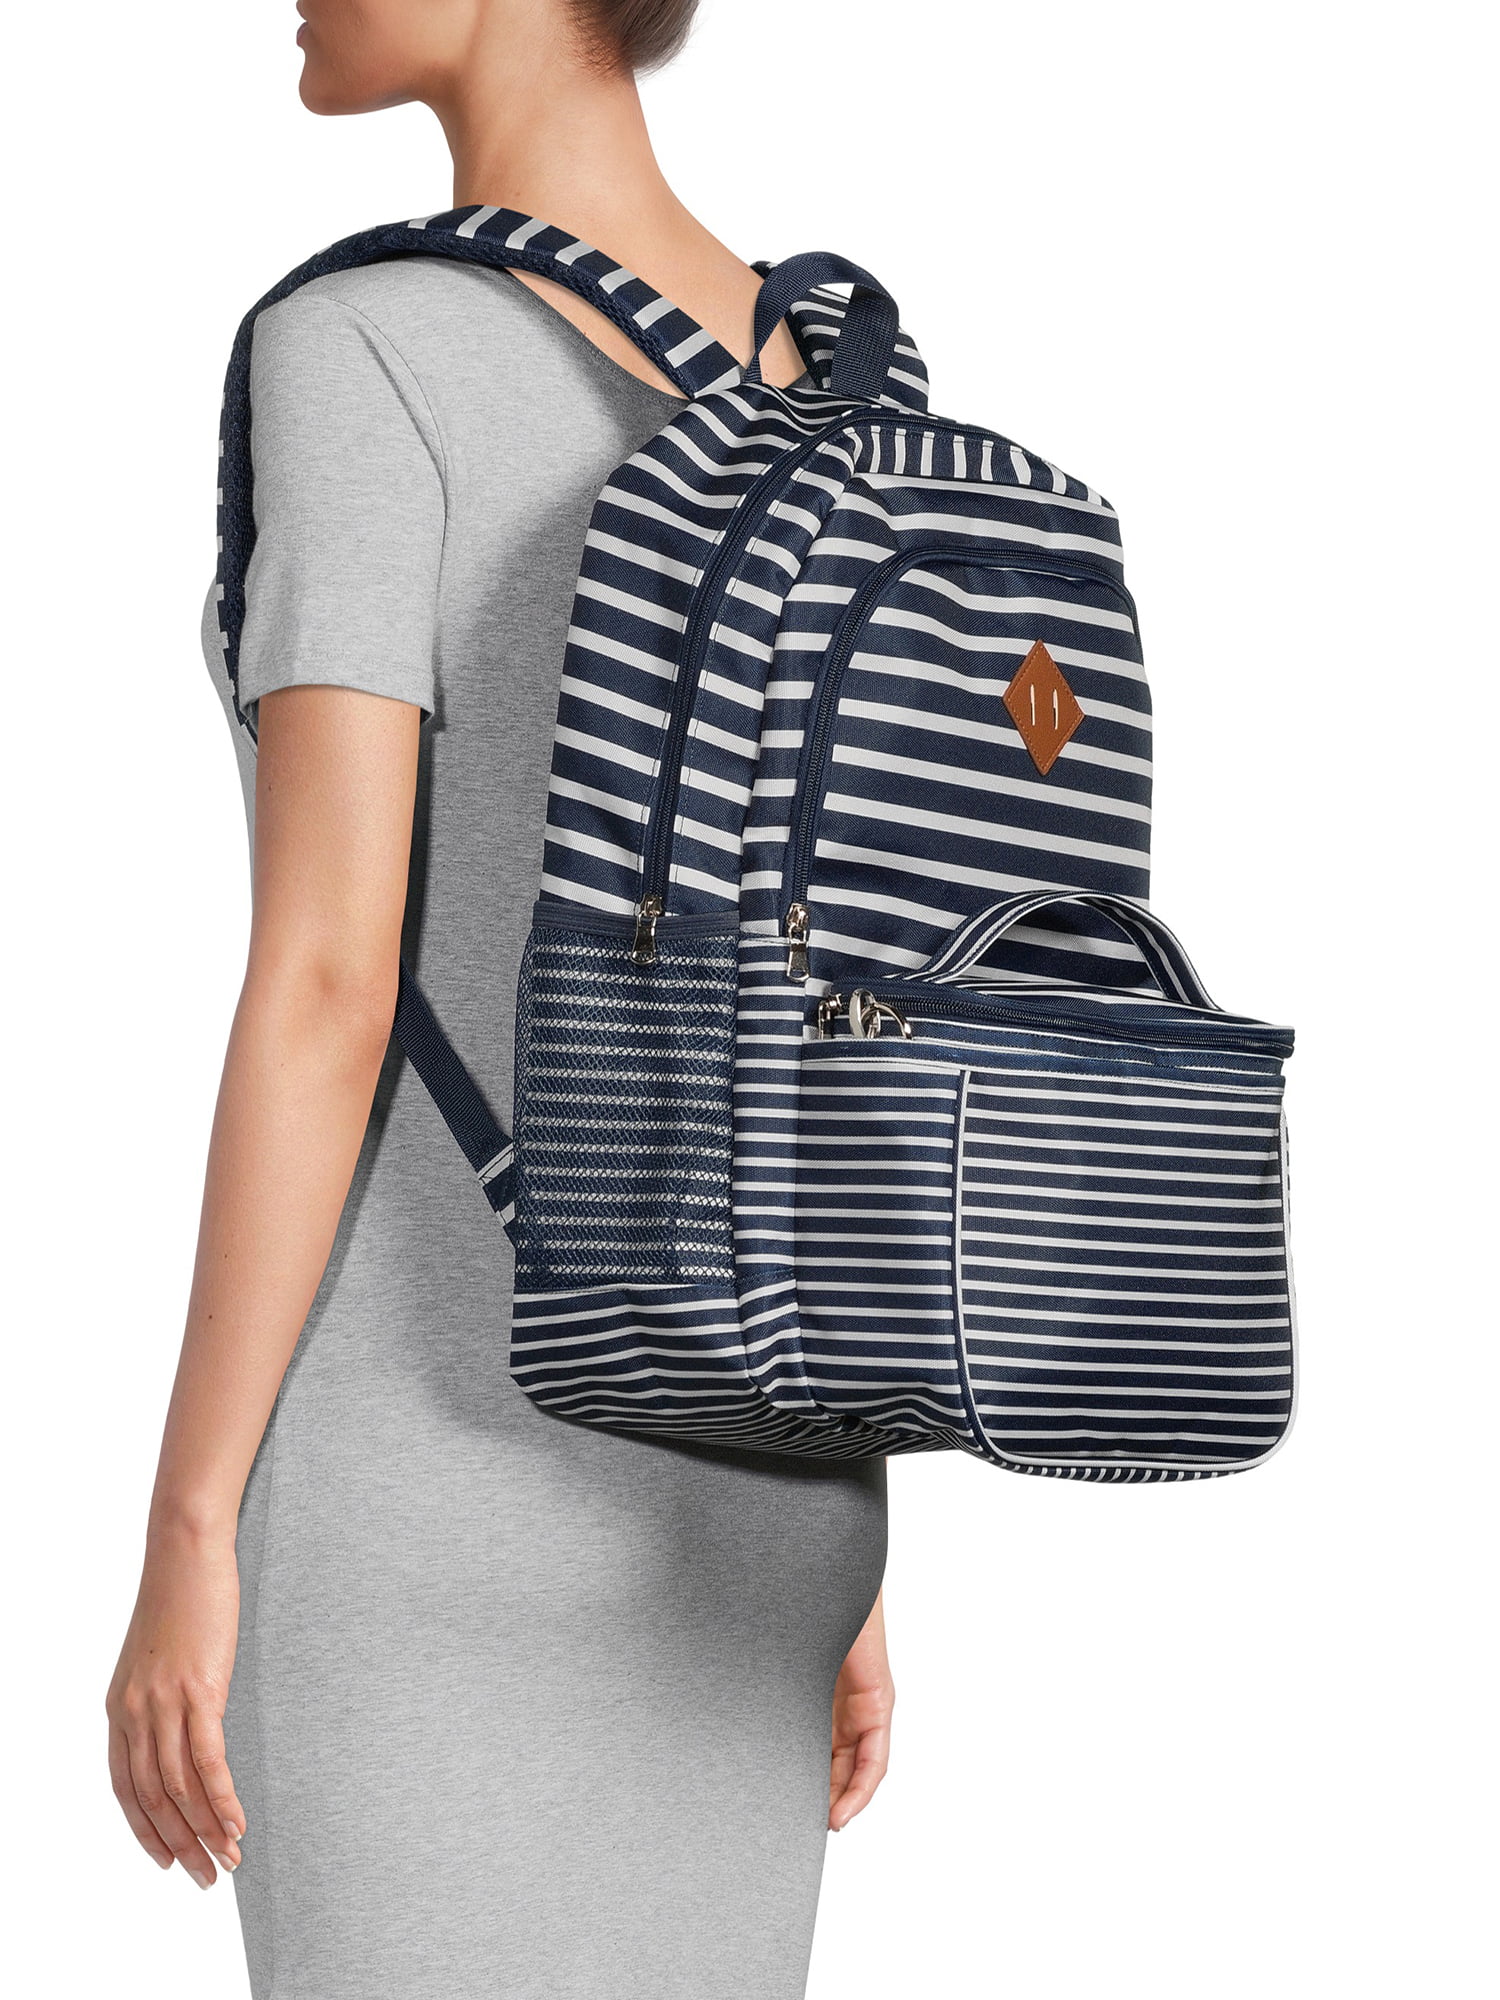 Delta-Backpack, MC-1701 – Mona B Retail